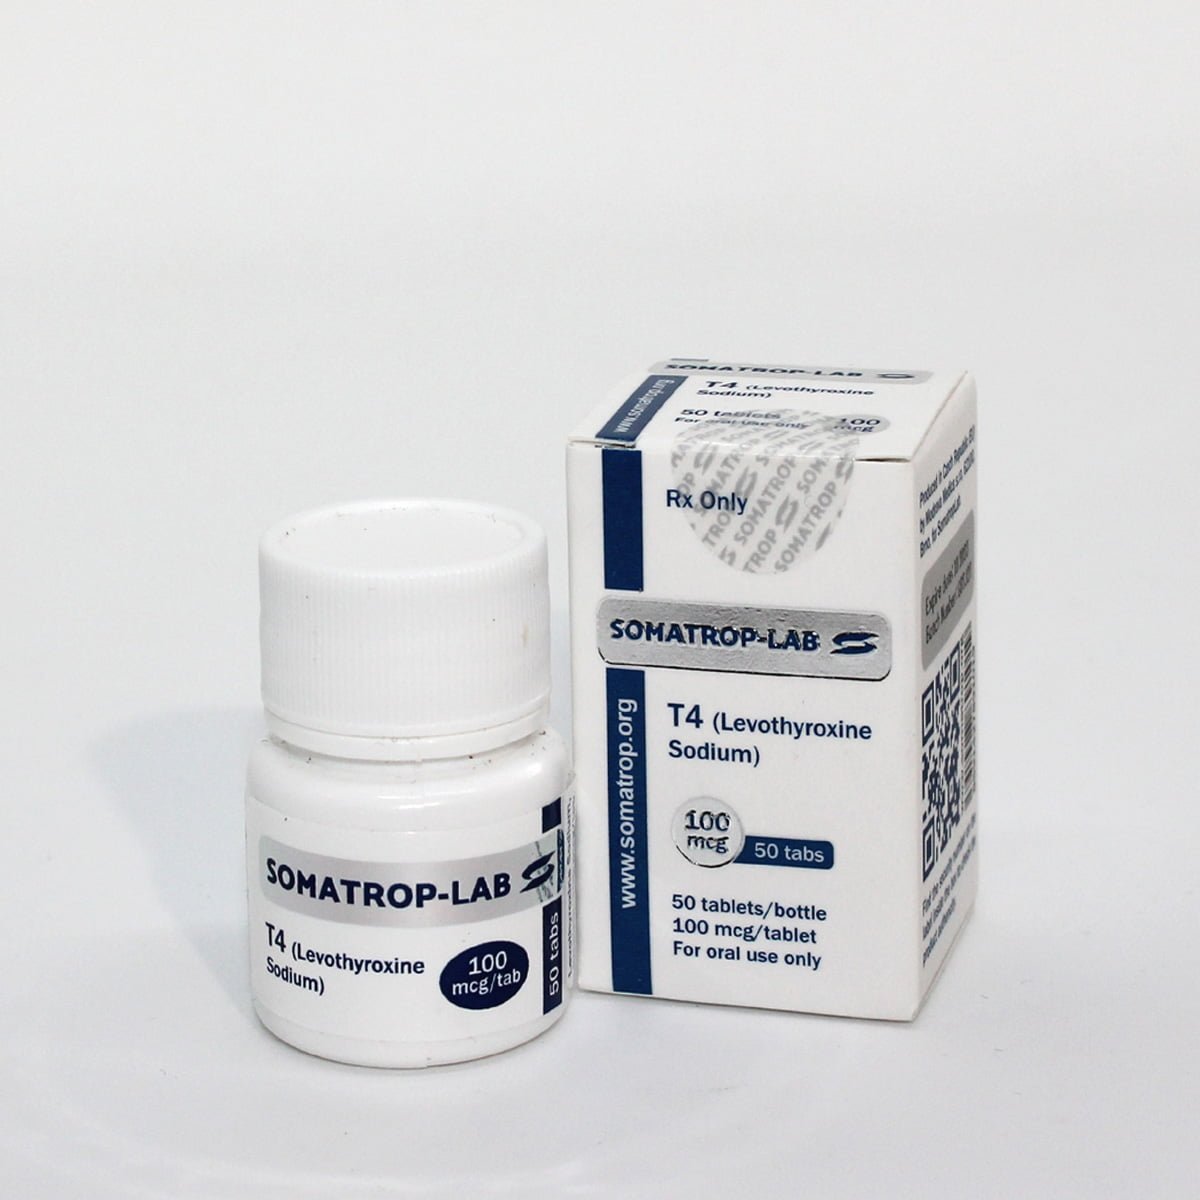 Somatrop-Lab T4 (Levothyroxine sodium)